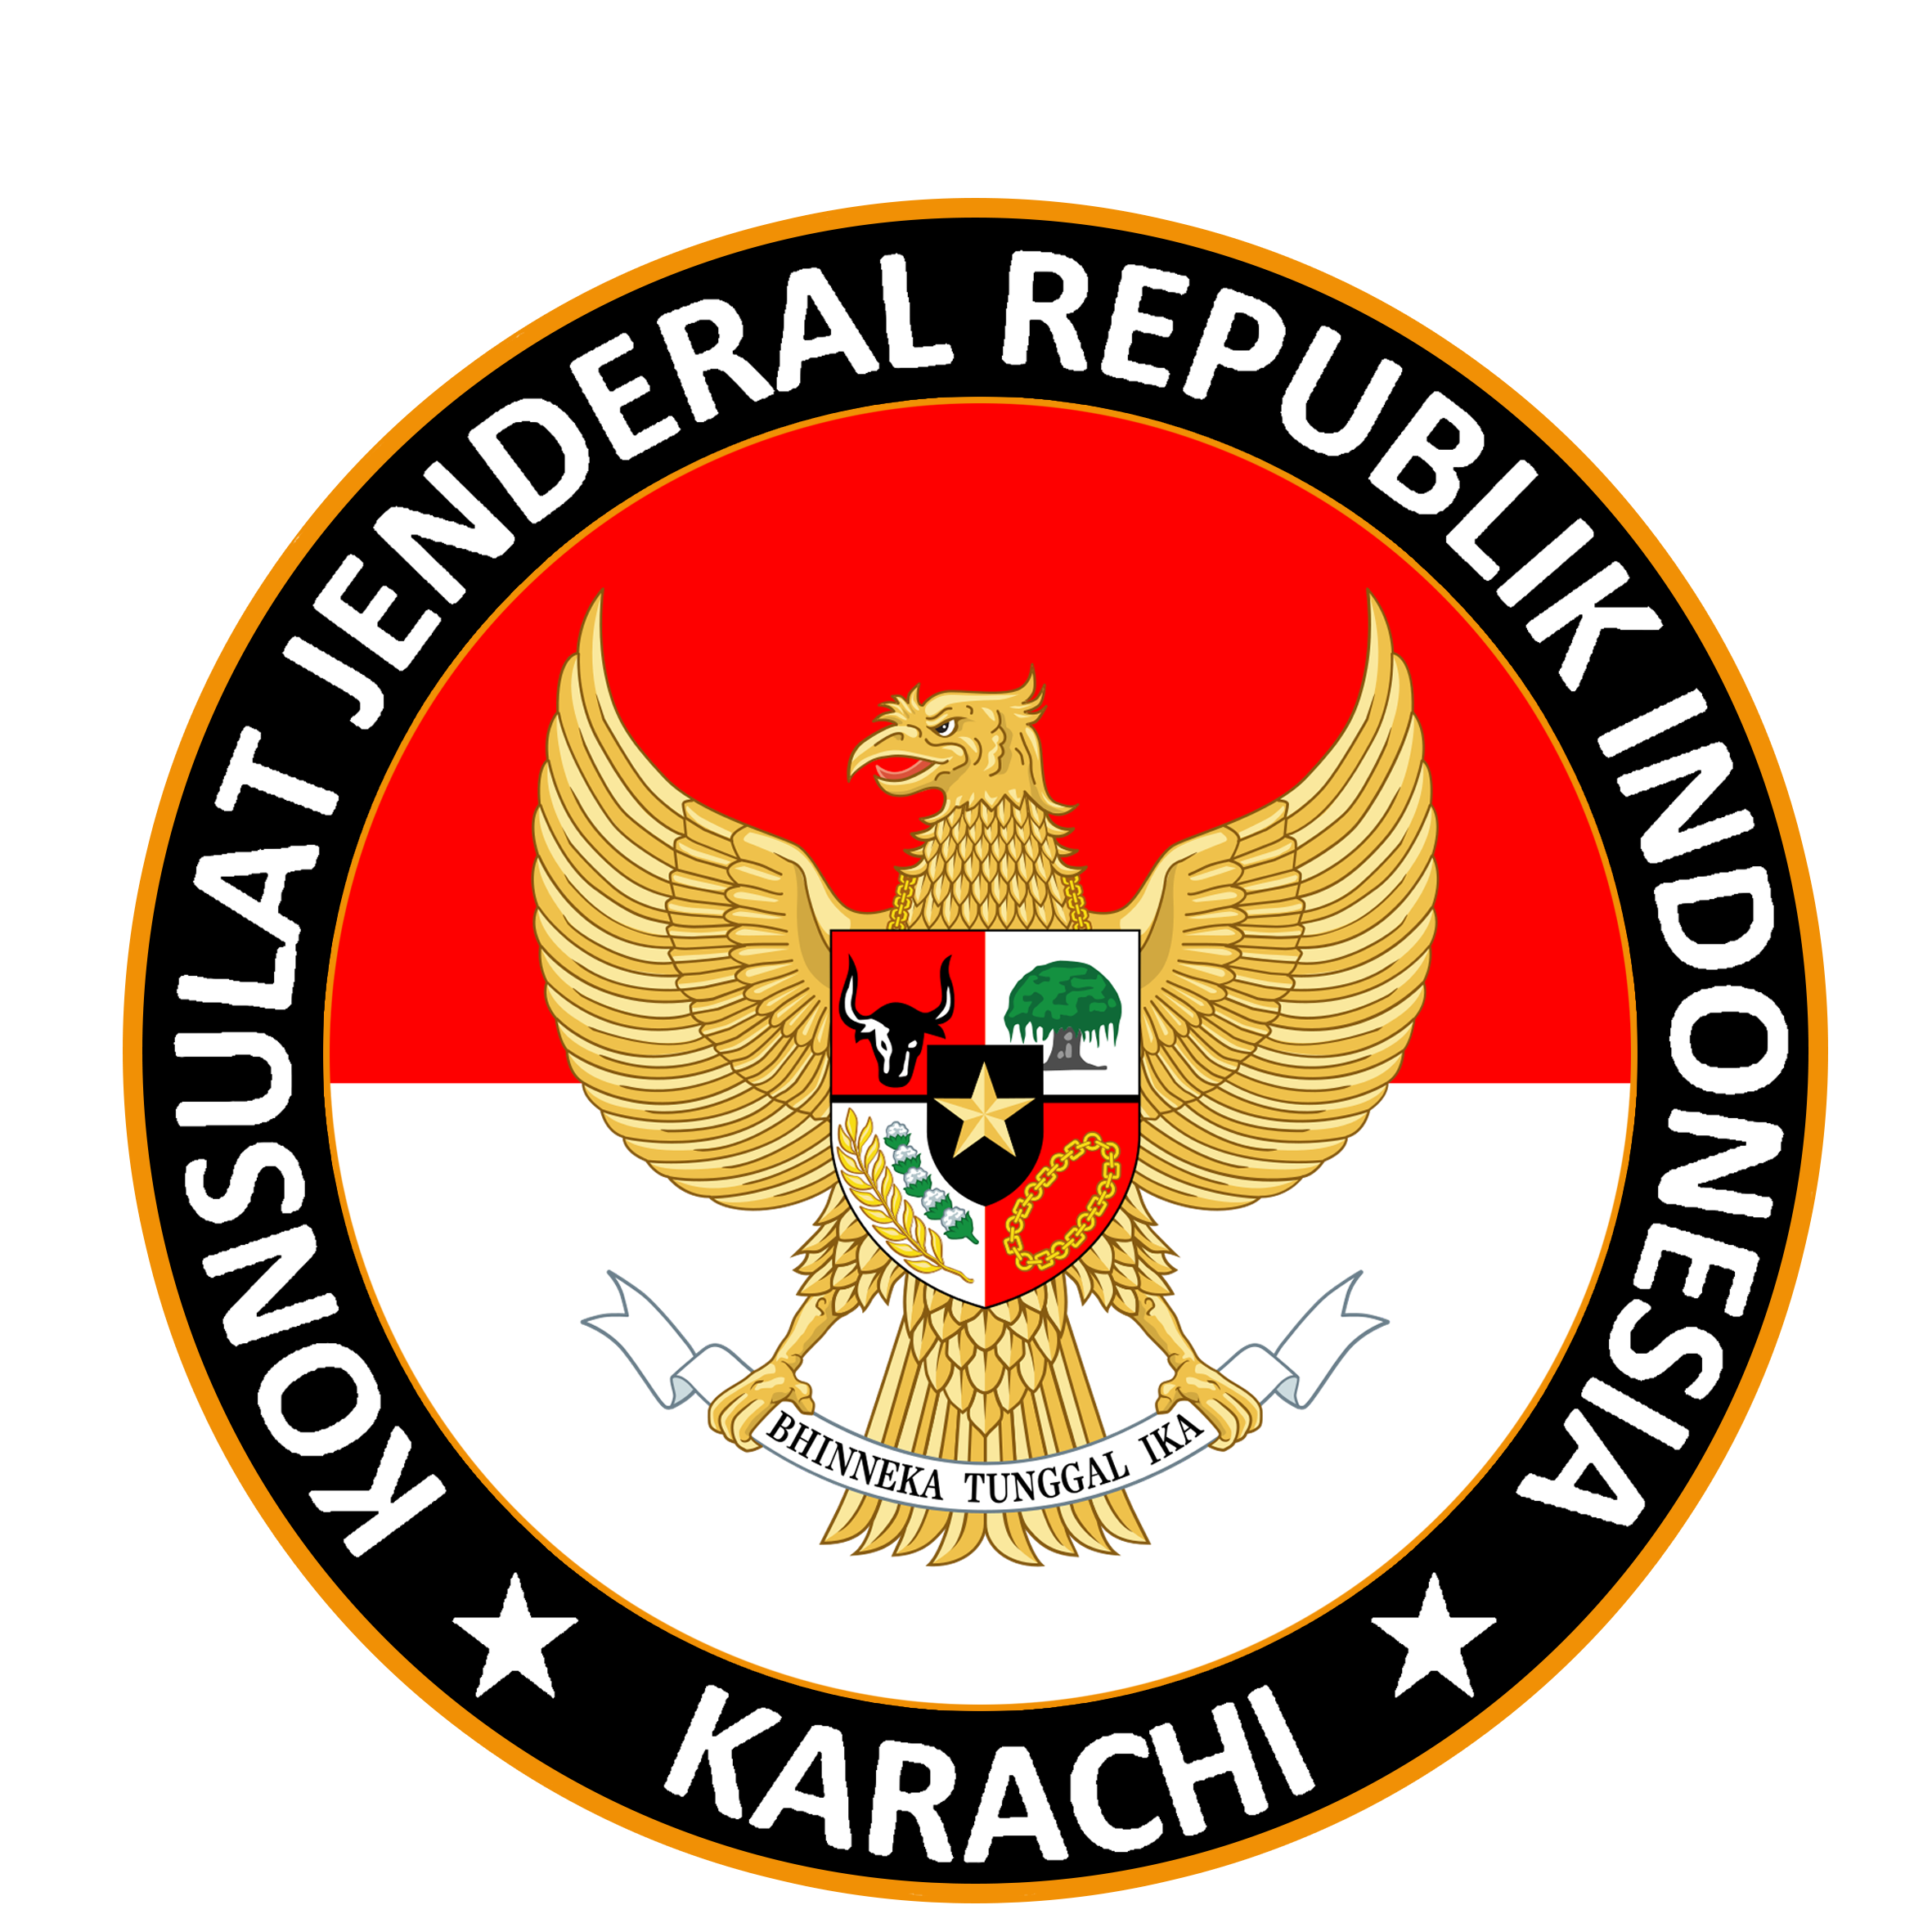 Consulate General of the Republic of Indonesia in Karachi